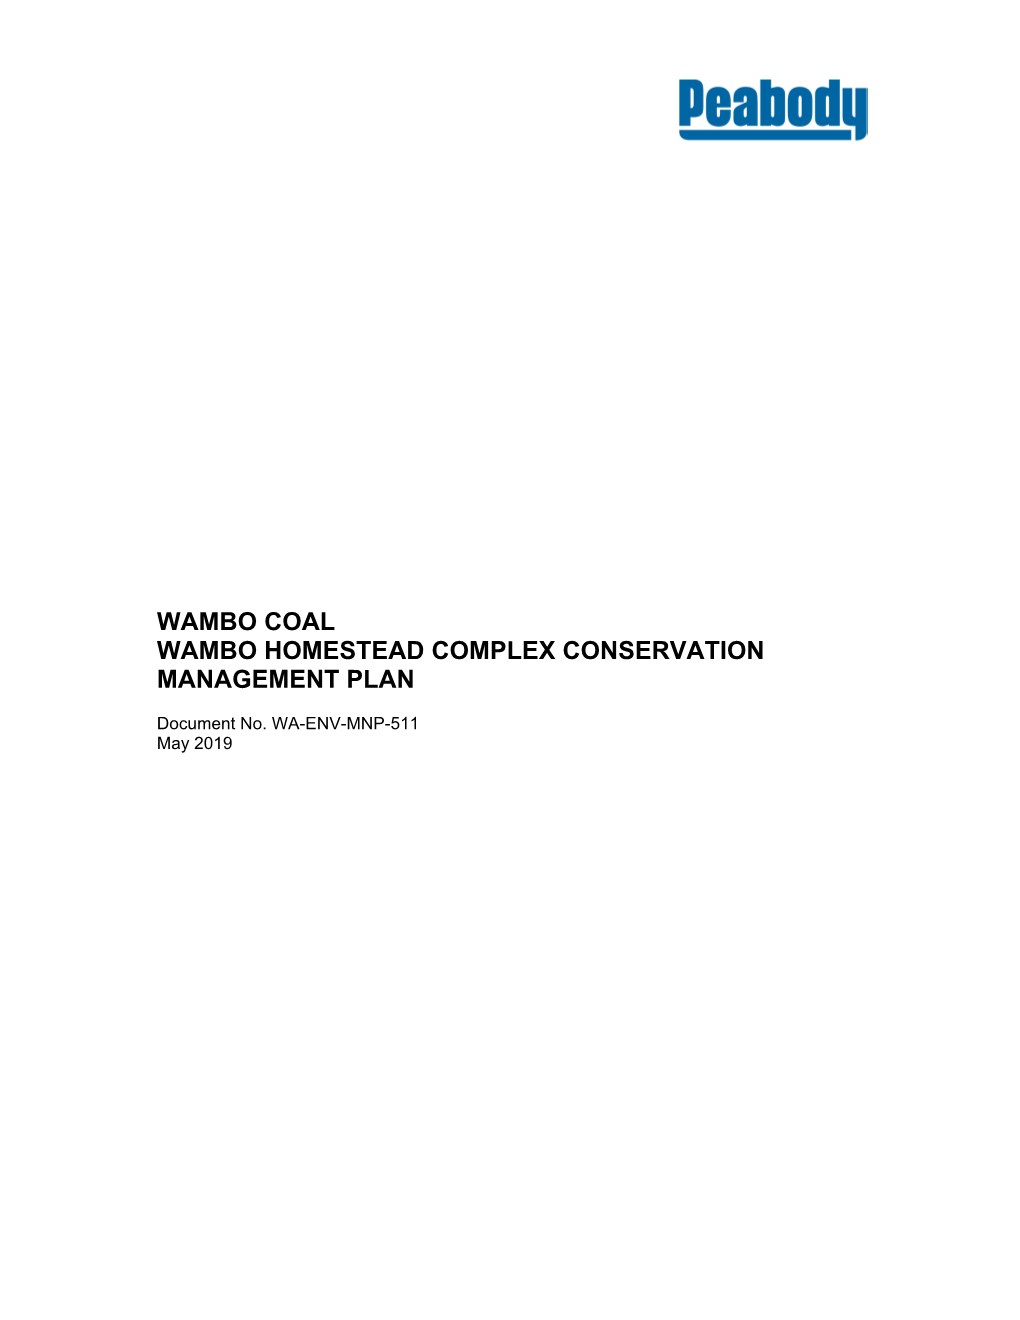 Wambo Homestead Complex Conservation Management Plan